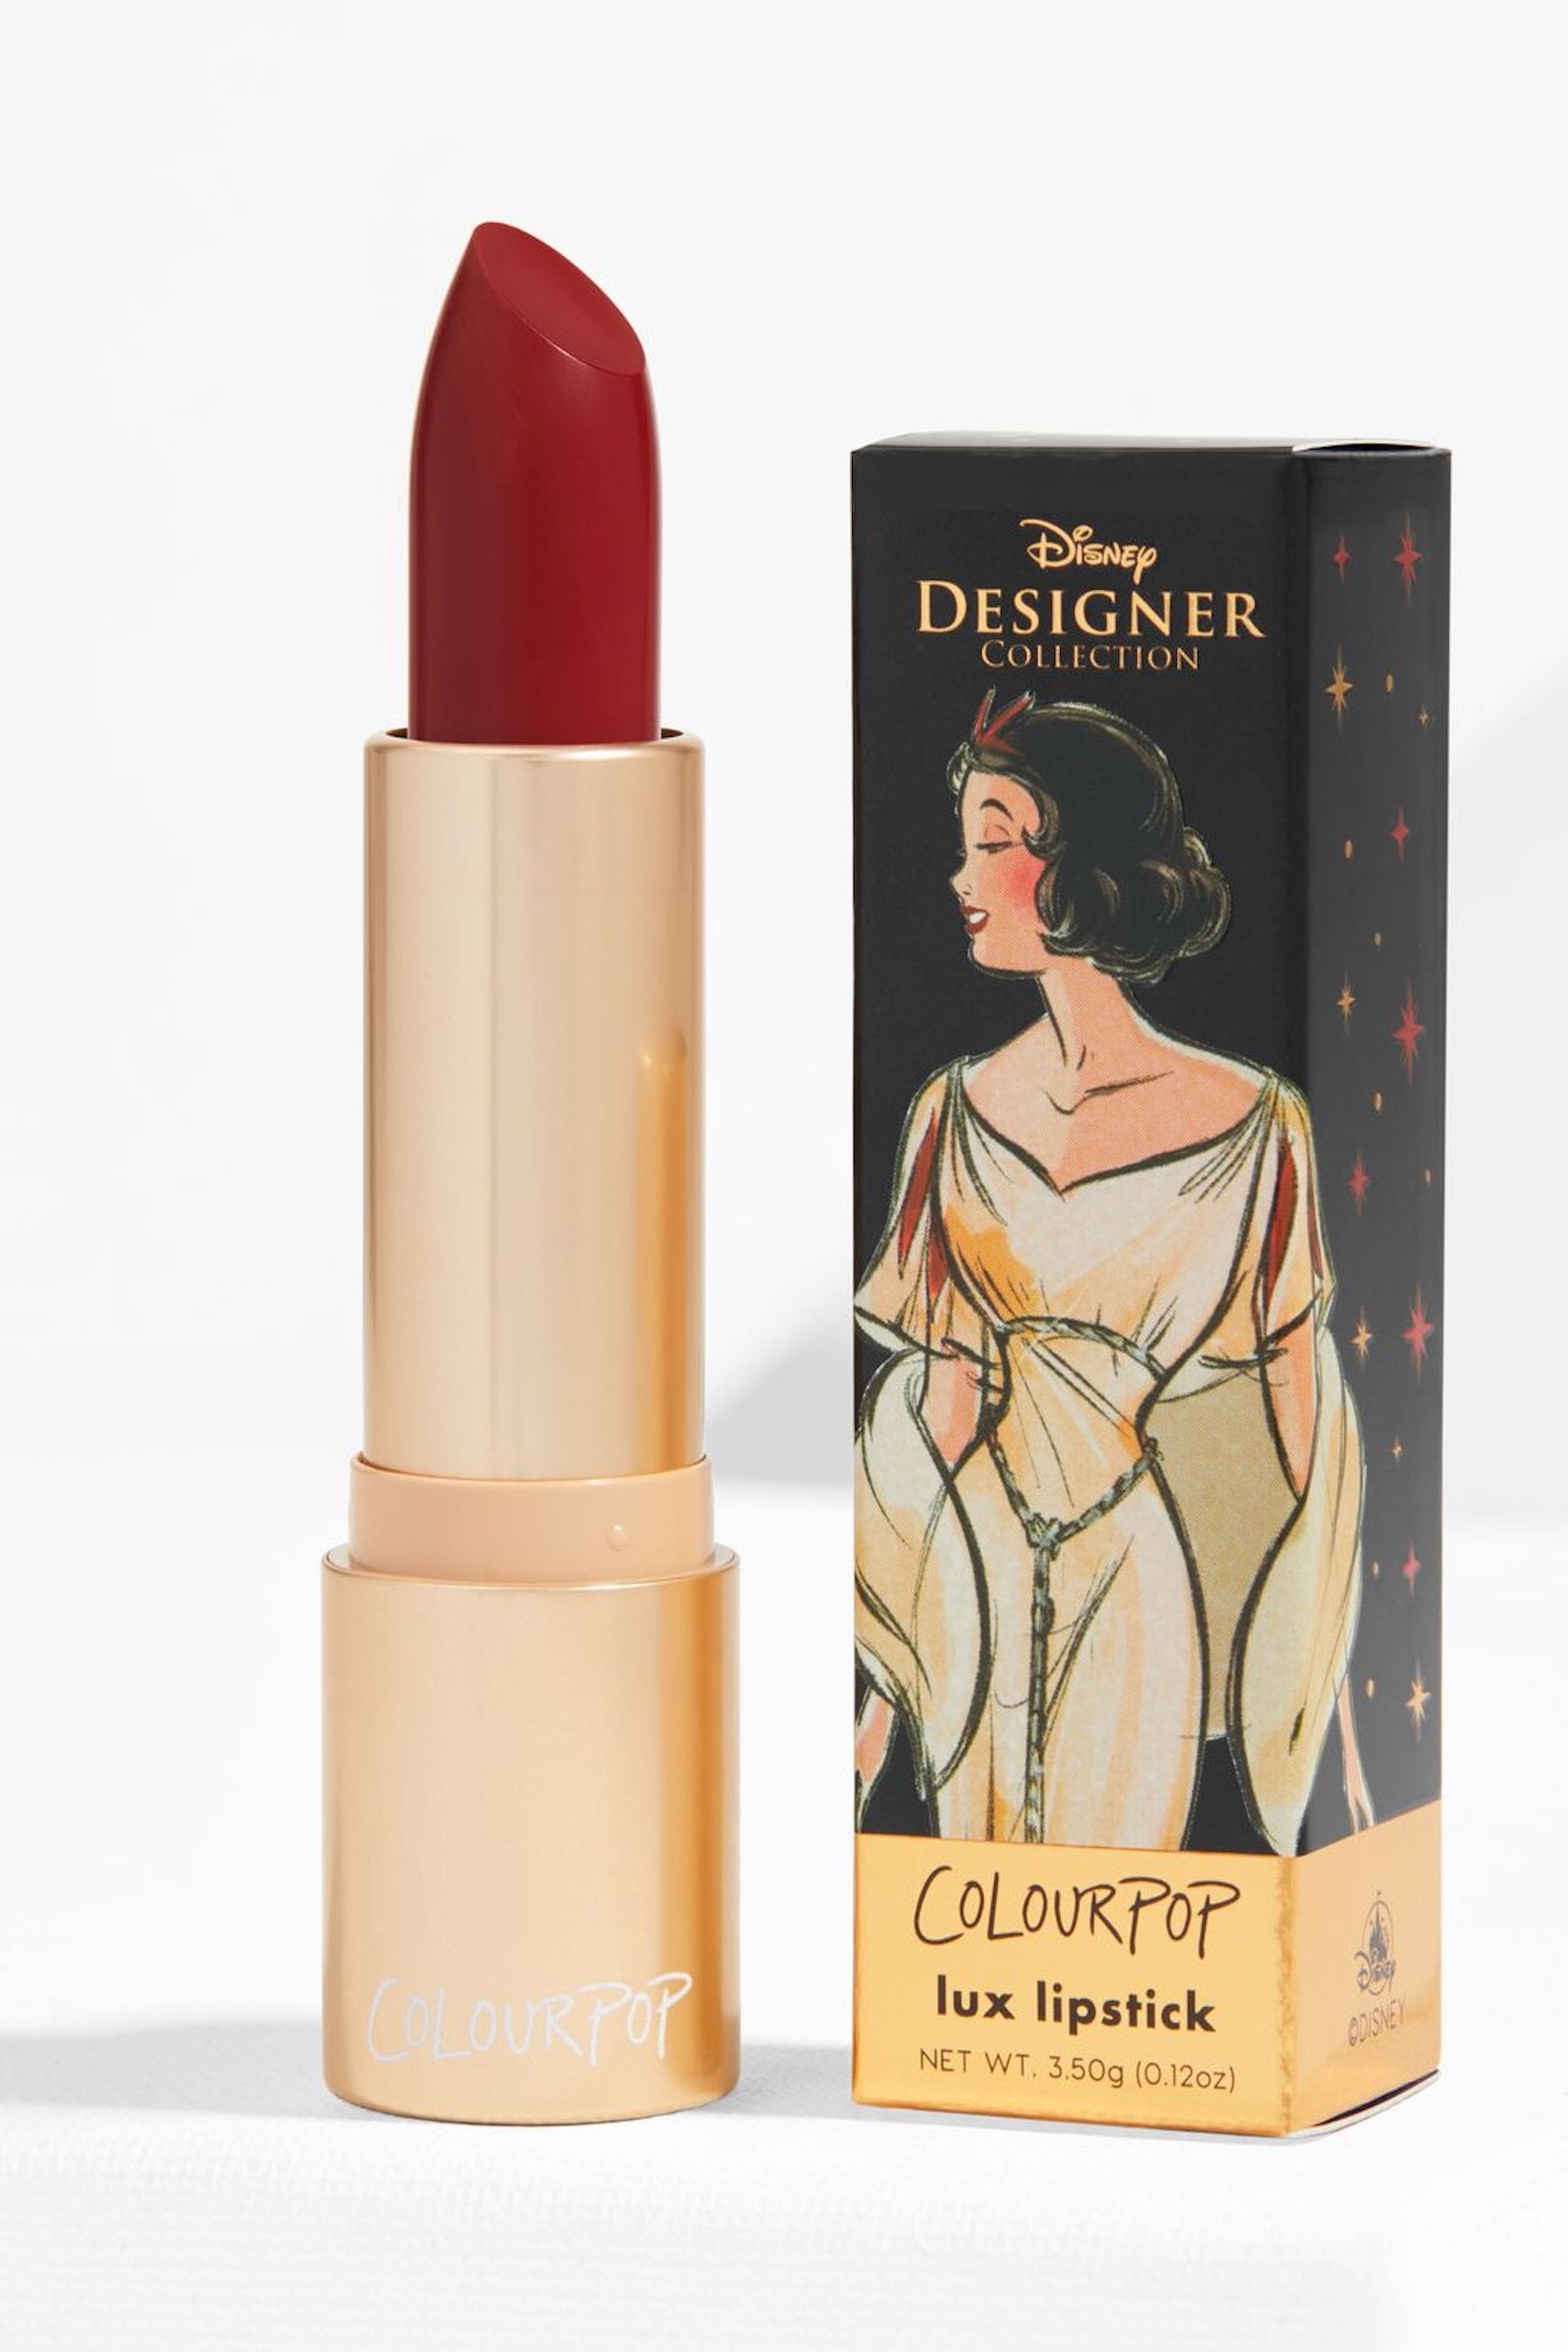 colourpop-x-disney-lux-lipstick-snow-white-packaging-7-www-colourpop-com-1537310577